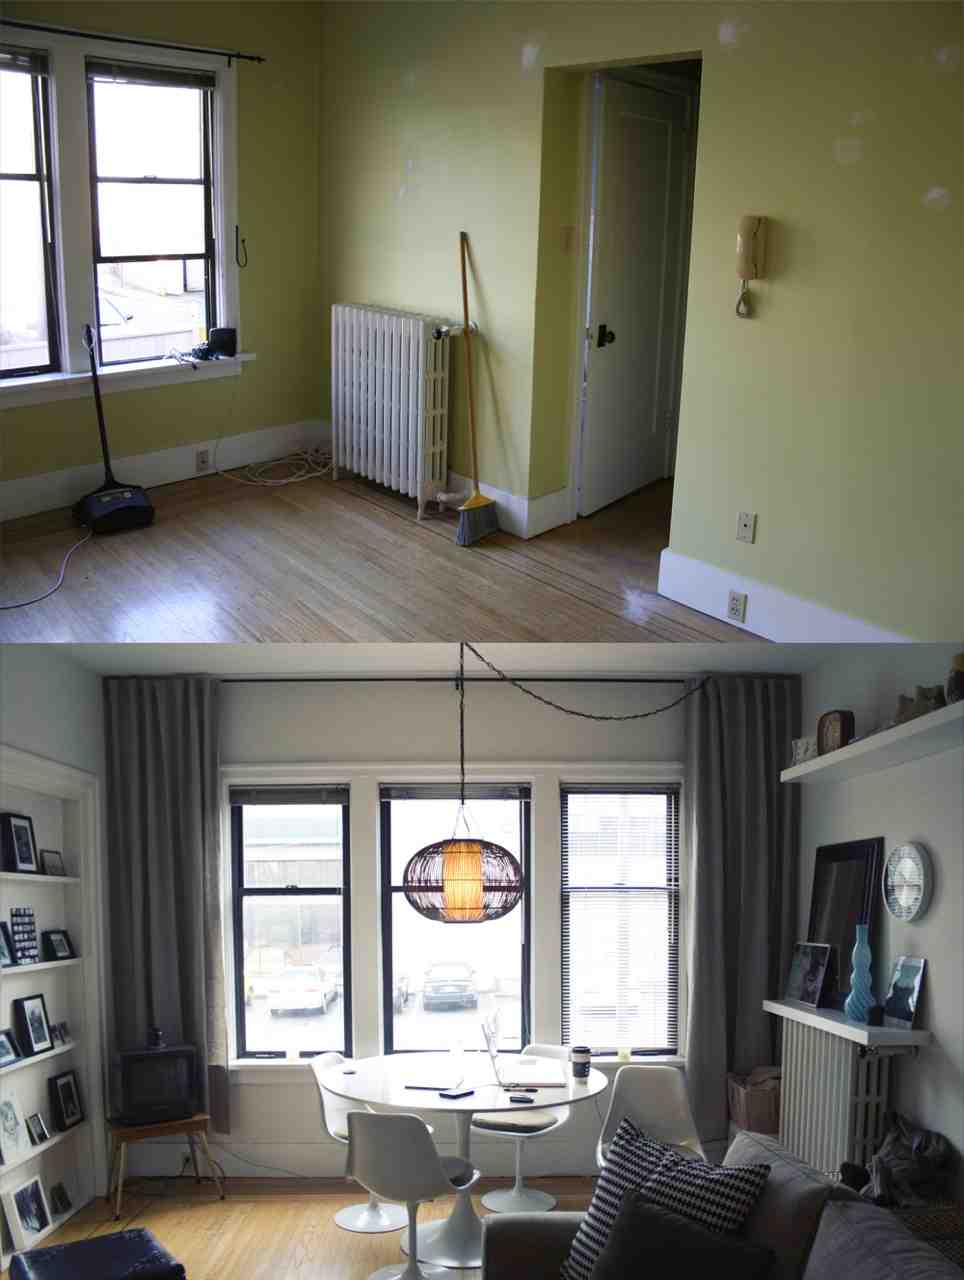 small apartment decorating ideas on a budget - decor ideas